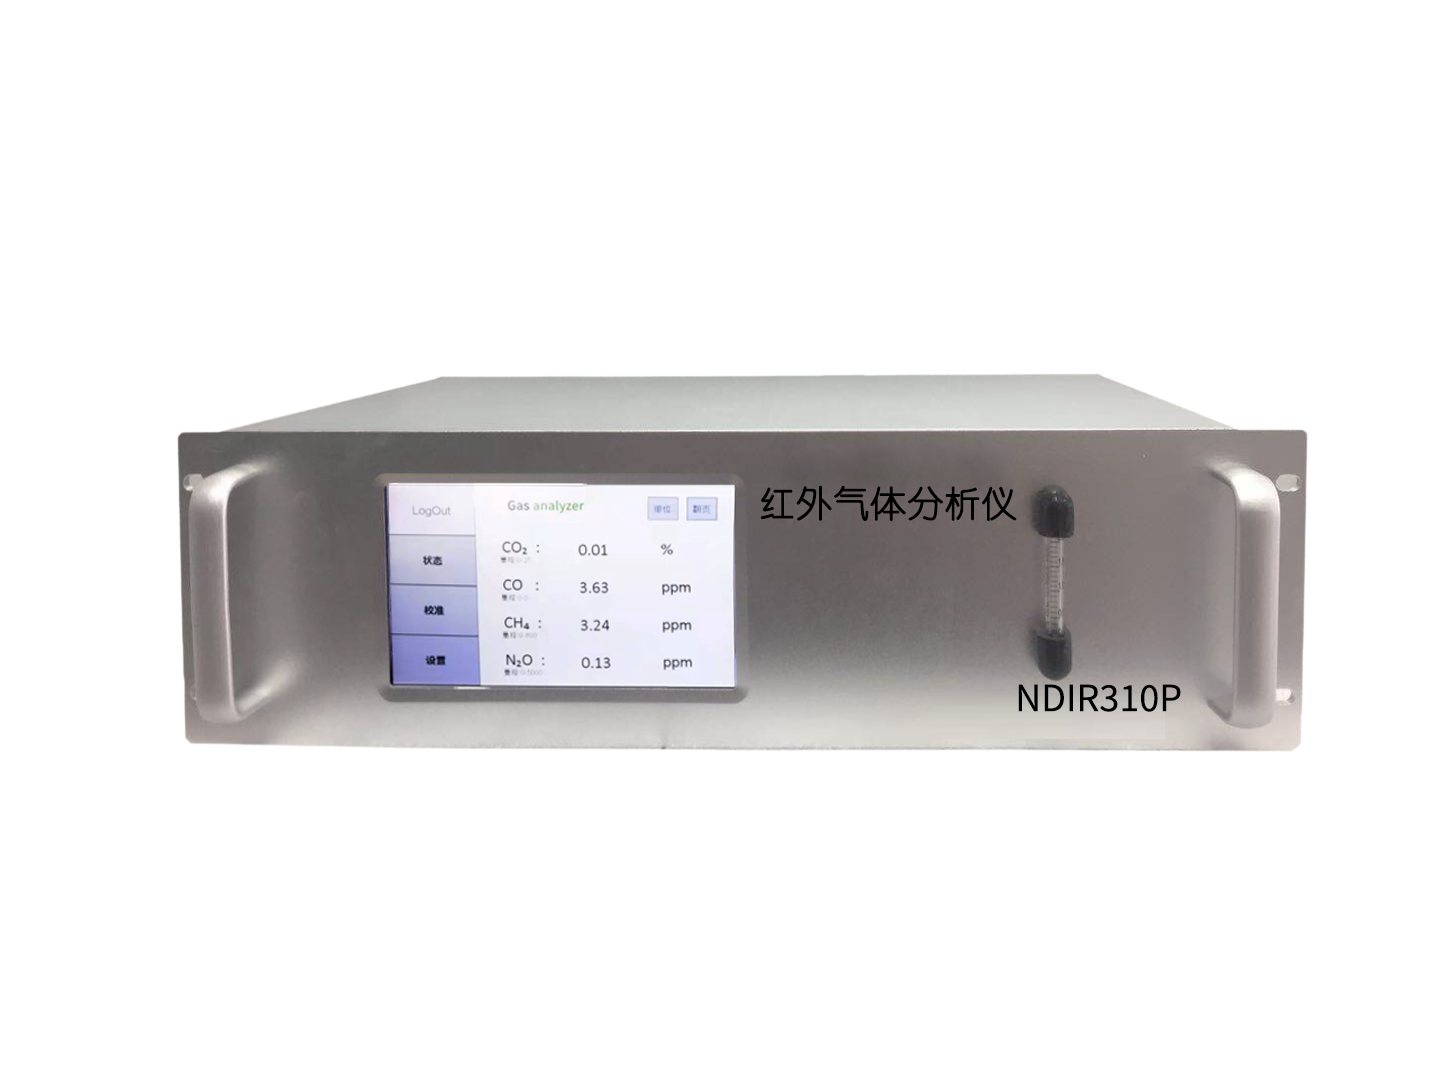 NDIR310P Infrared gas analyzer